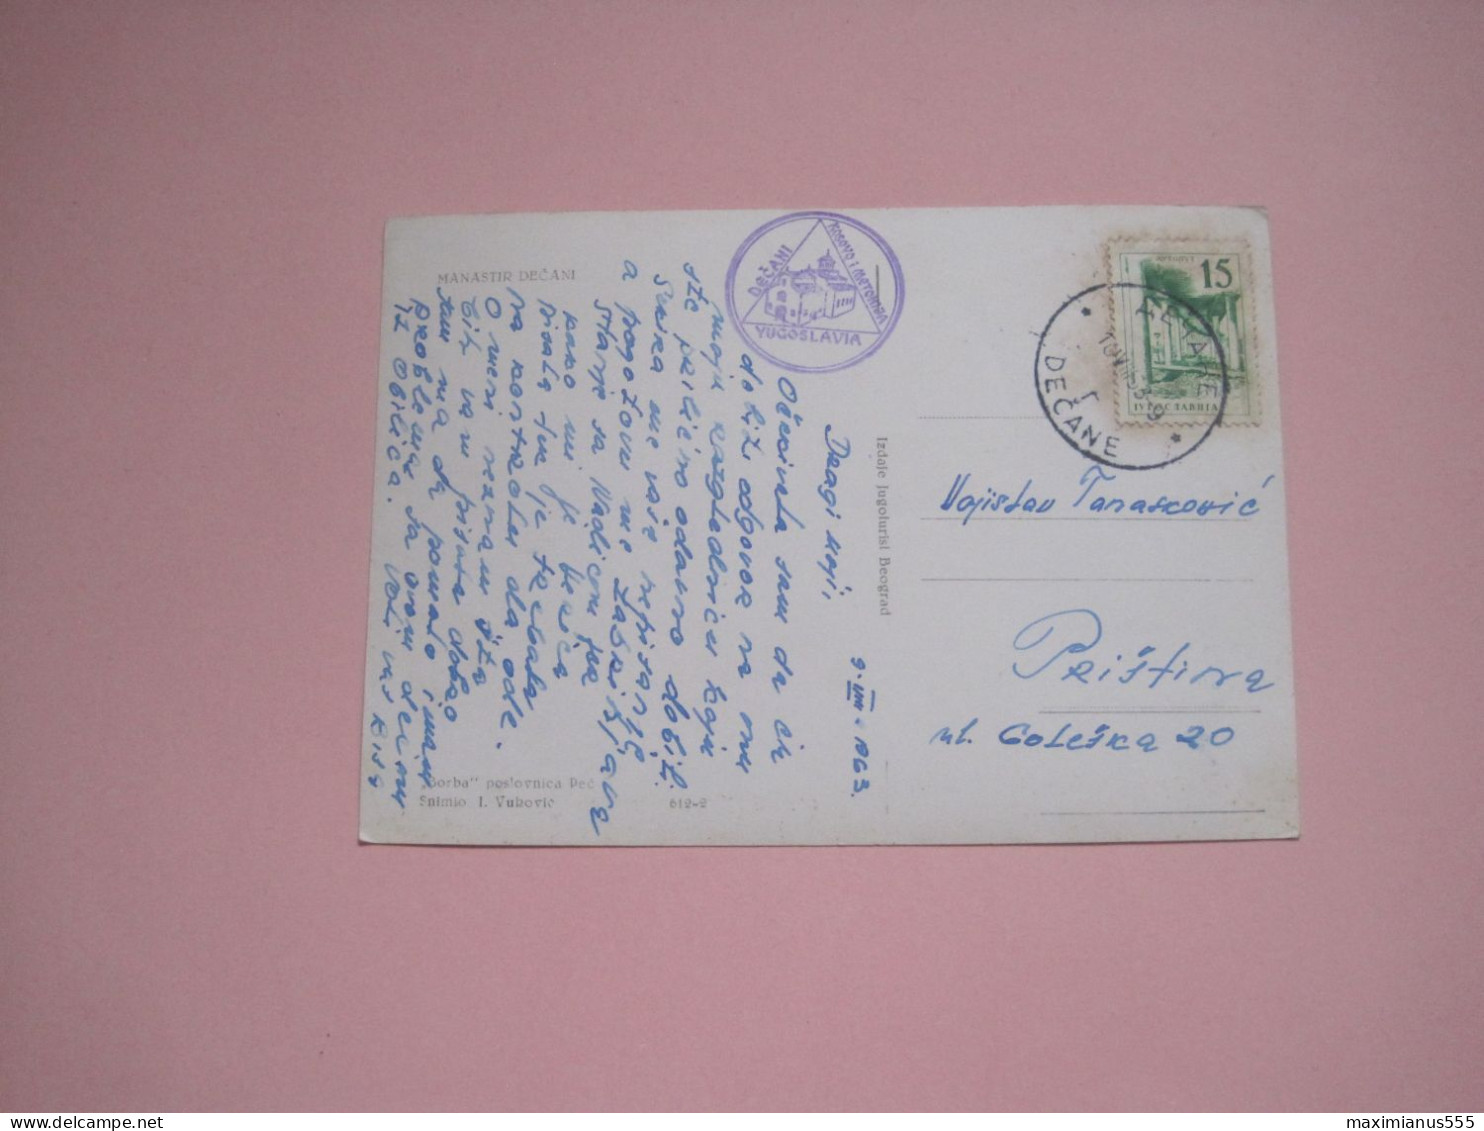 Postcard City Of Decane Sent To Pristina 1963, Ex Yugoslavia With Church Seal - Kosovo